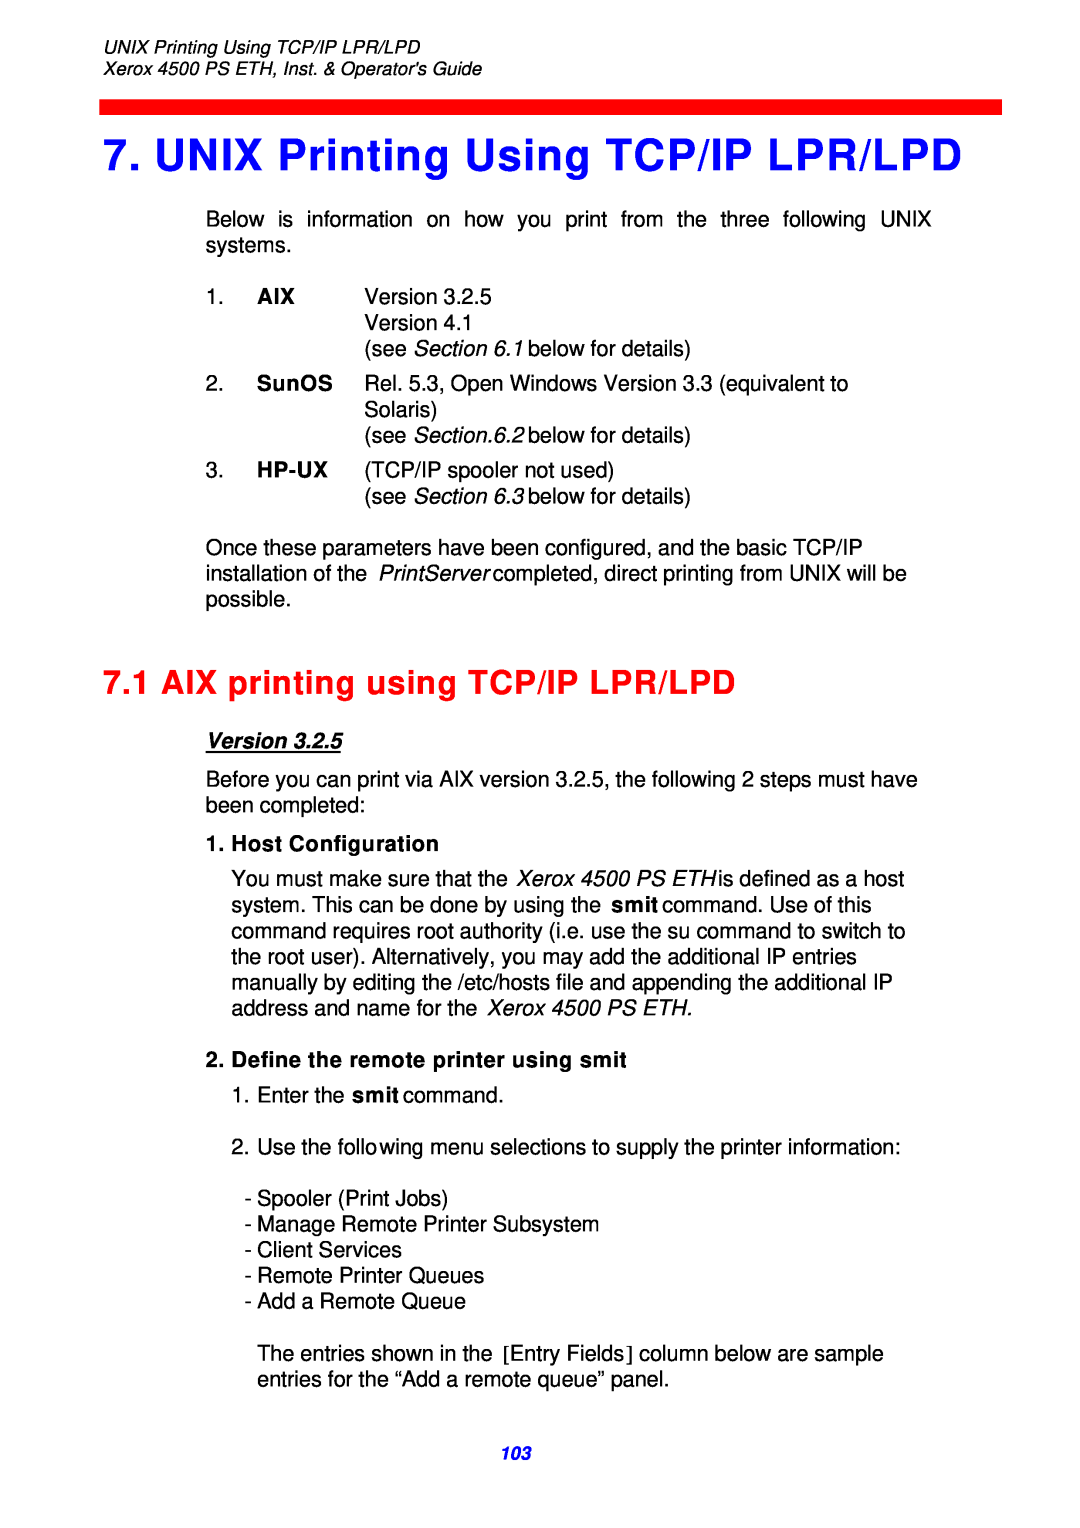 Xerox 4500 ps eth UNIX Printing Using TCP/IP LPR/LPD, AIX printing using TCP/IP LPR/LPD, SunOS, Hp-Ux, Version 